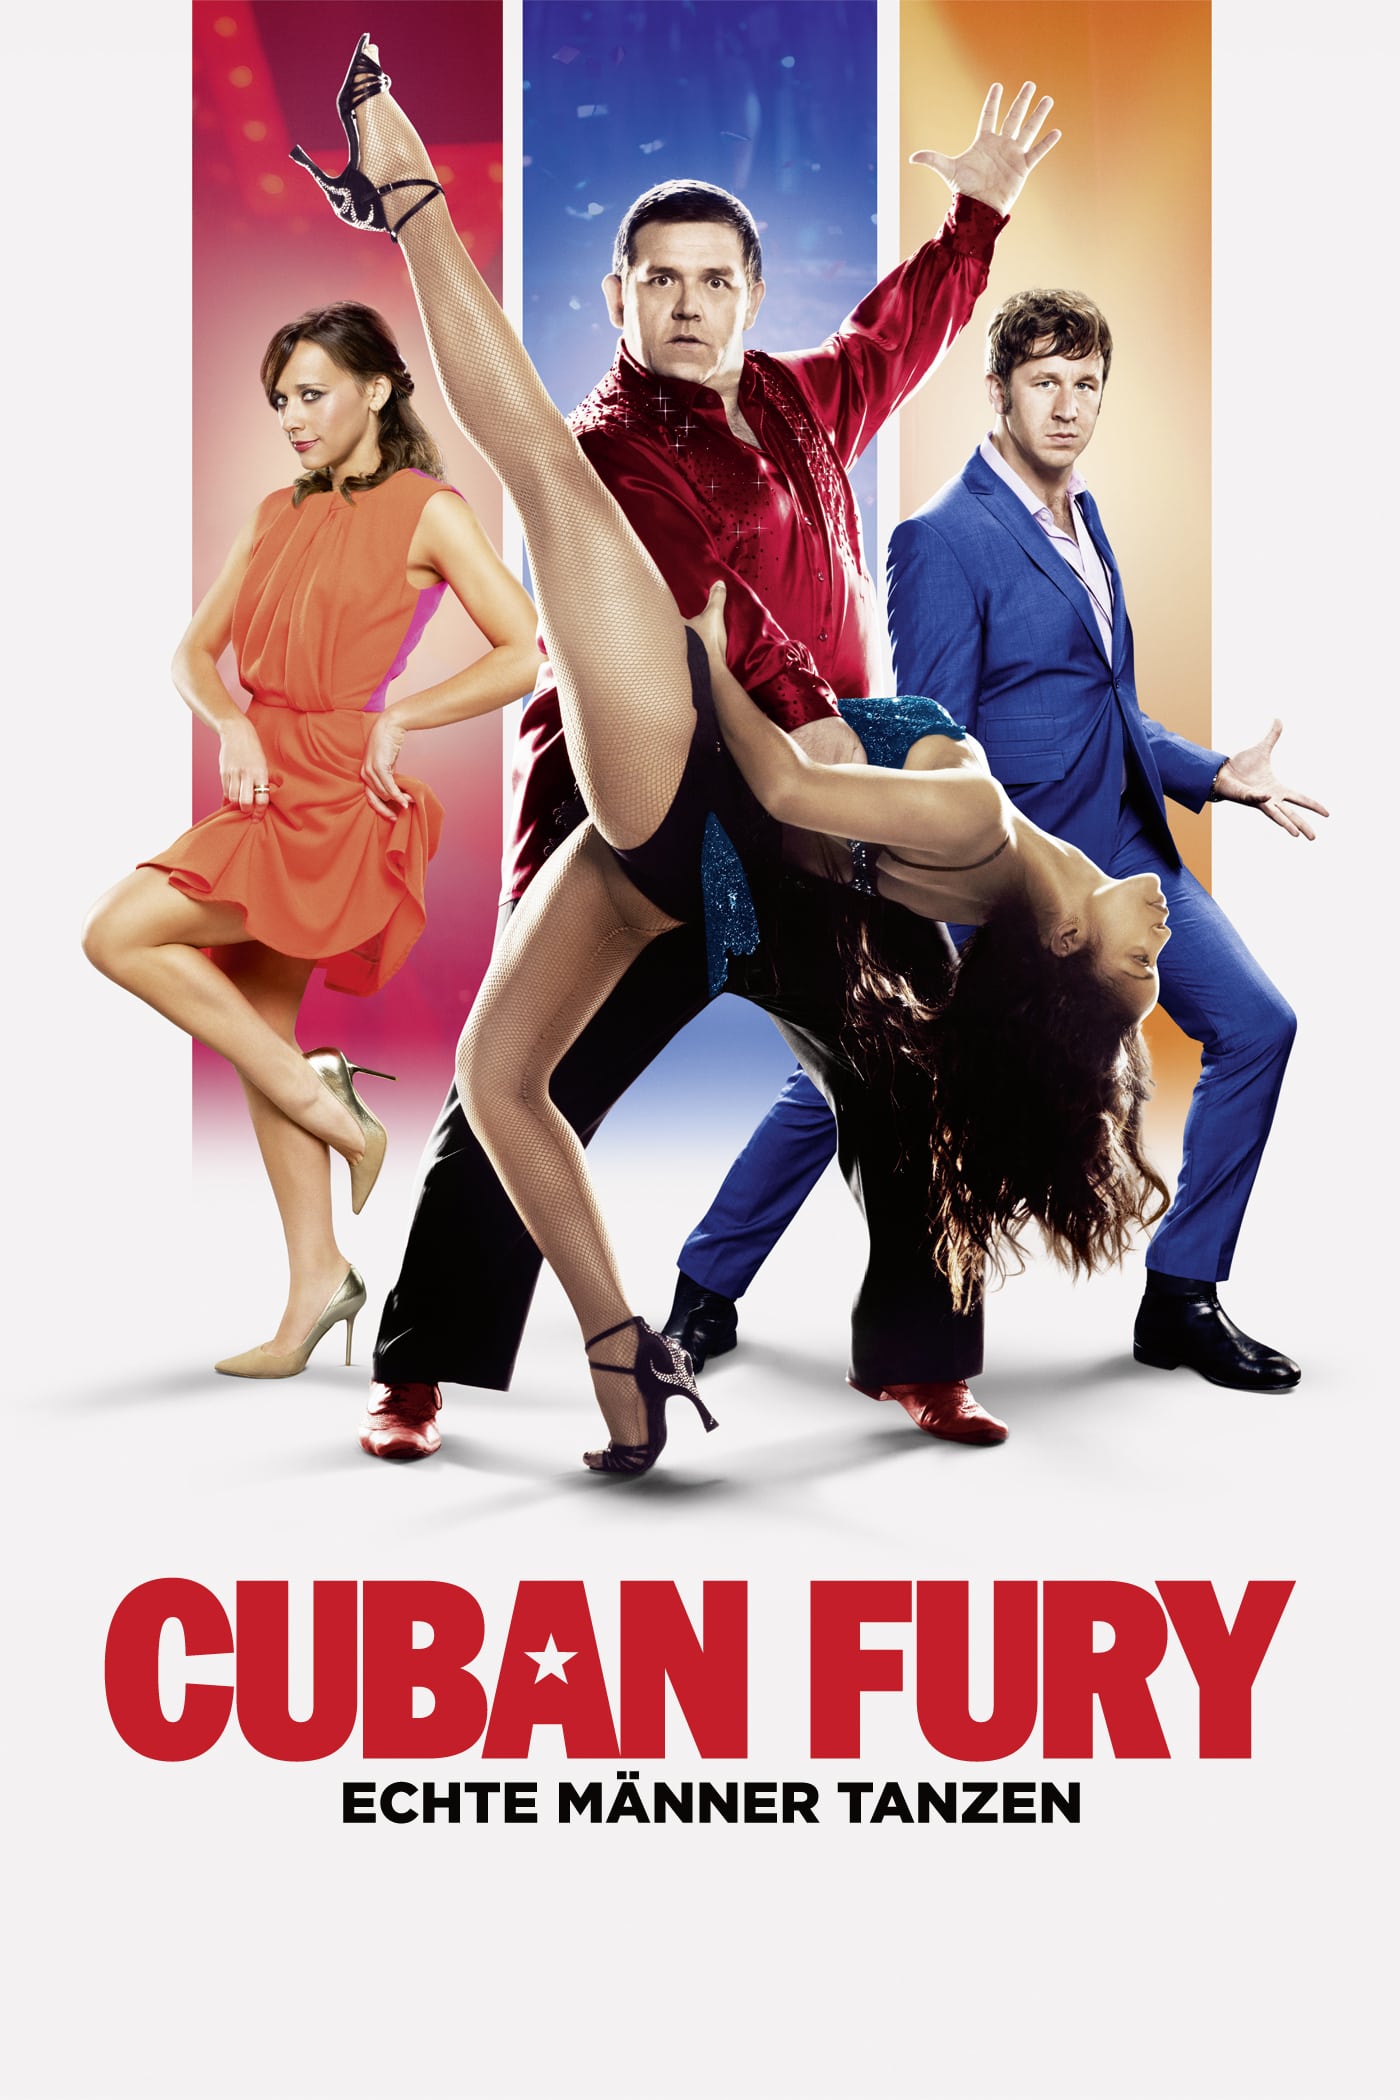 Plakat von "Cuban Fury - Echte Männer tanzen"